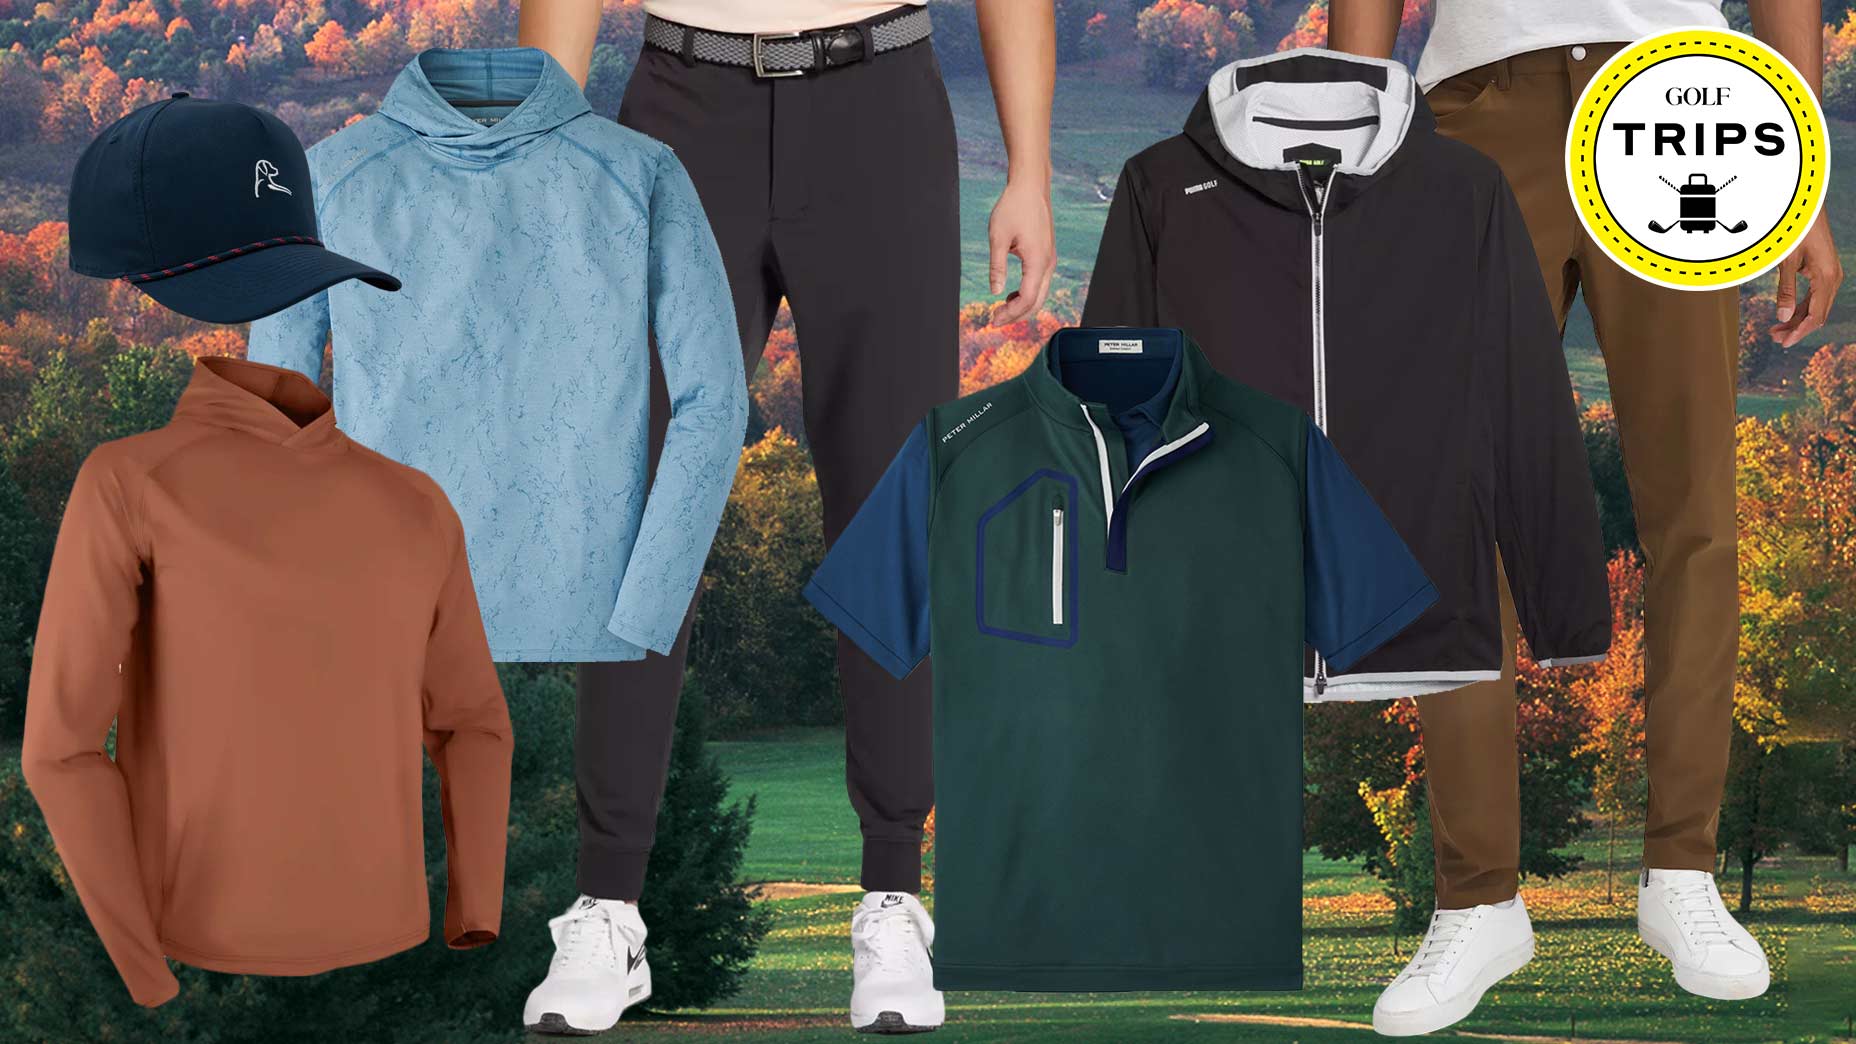 lululemon Men's Engineered Warmth Long Sleeve Crew, Golf Equipment: Clubs,  Balls, Bags